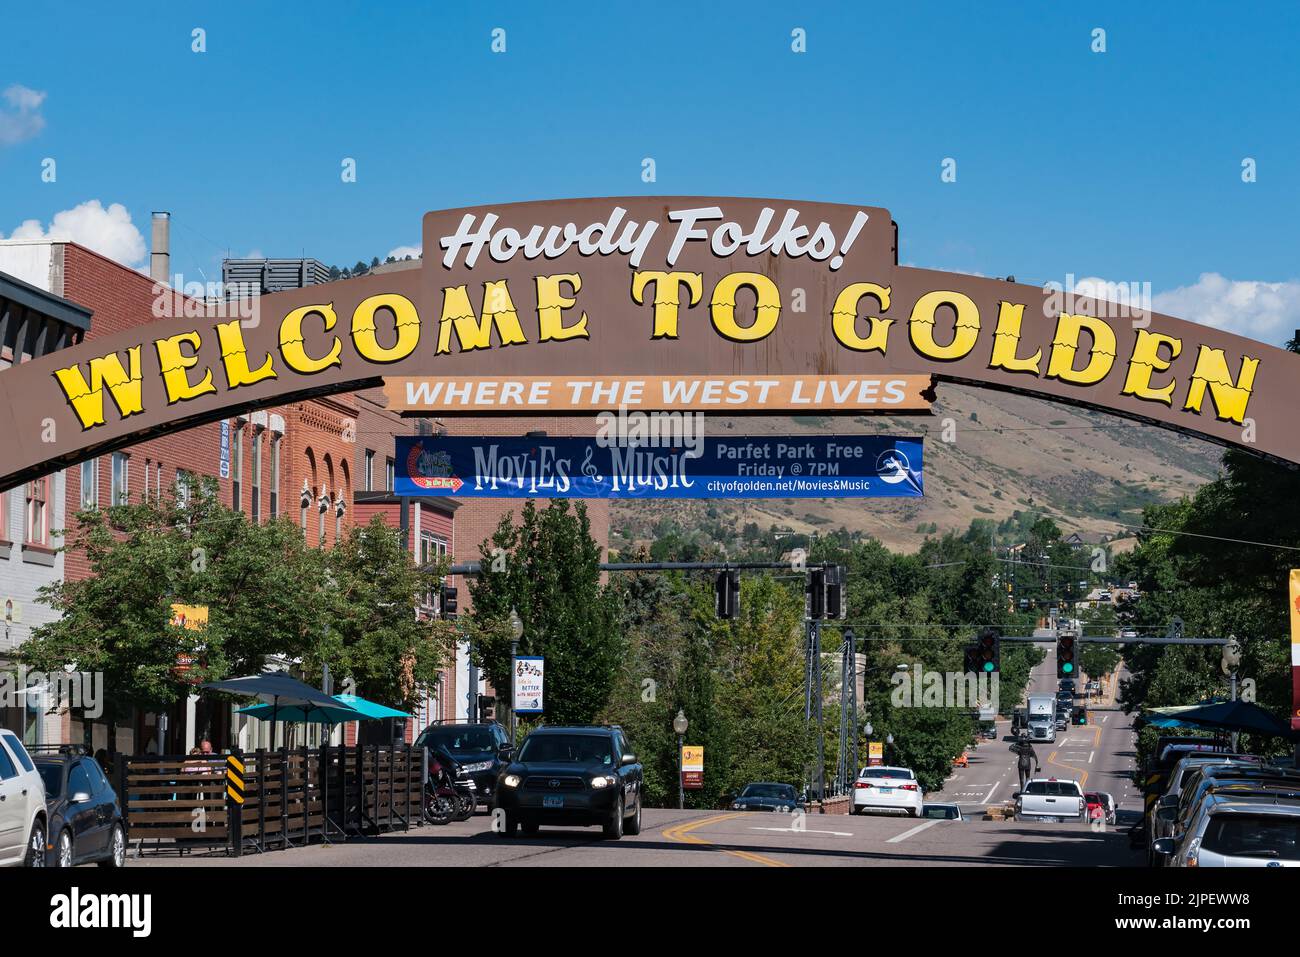 Visitor Parking  City of Golden, Colorado